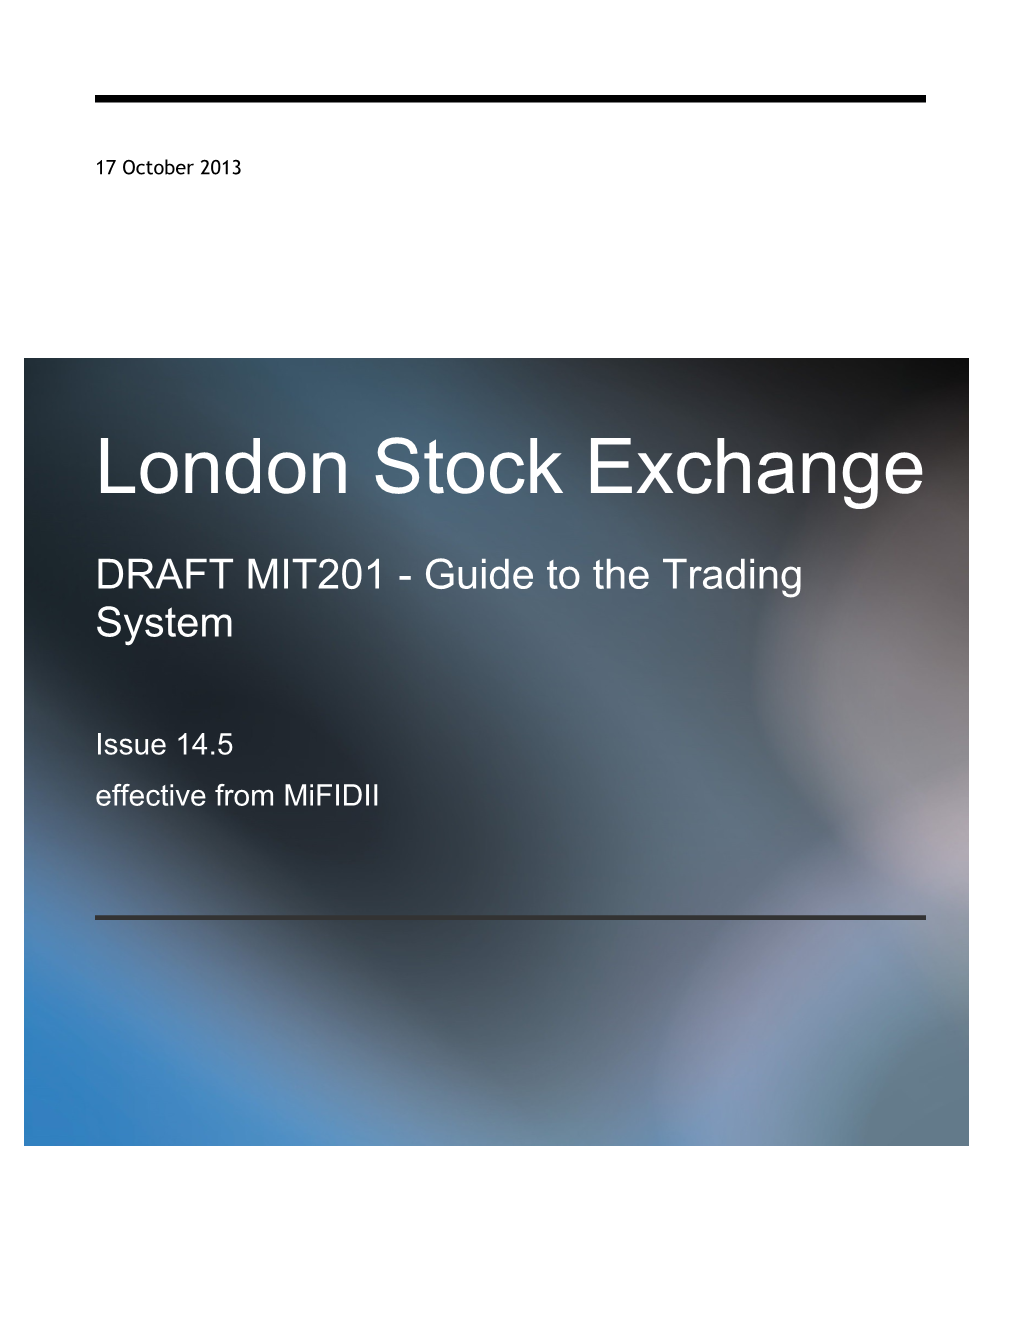 1.2Relevant London Stock Exchange Communication Channels